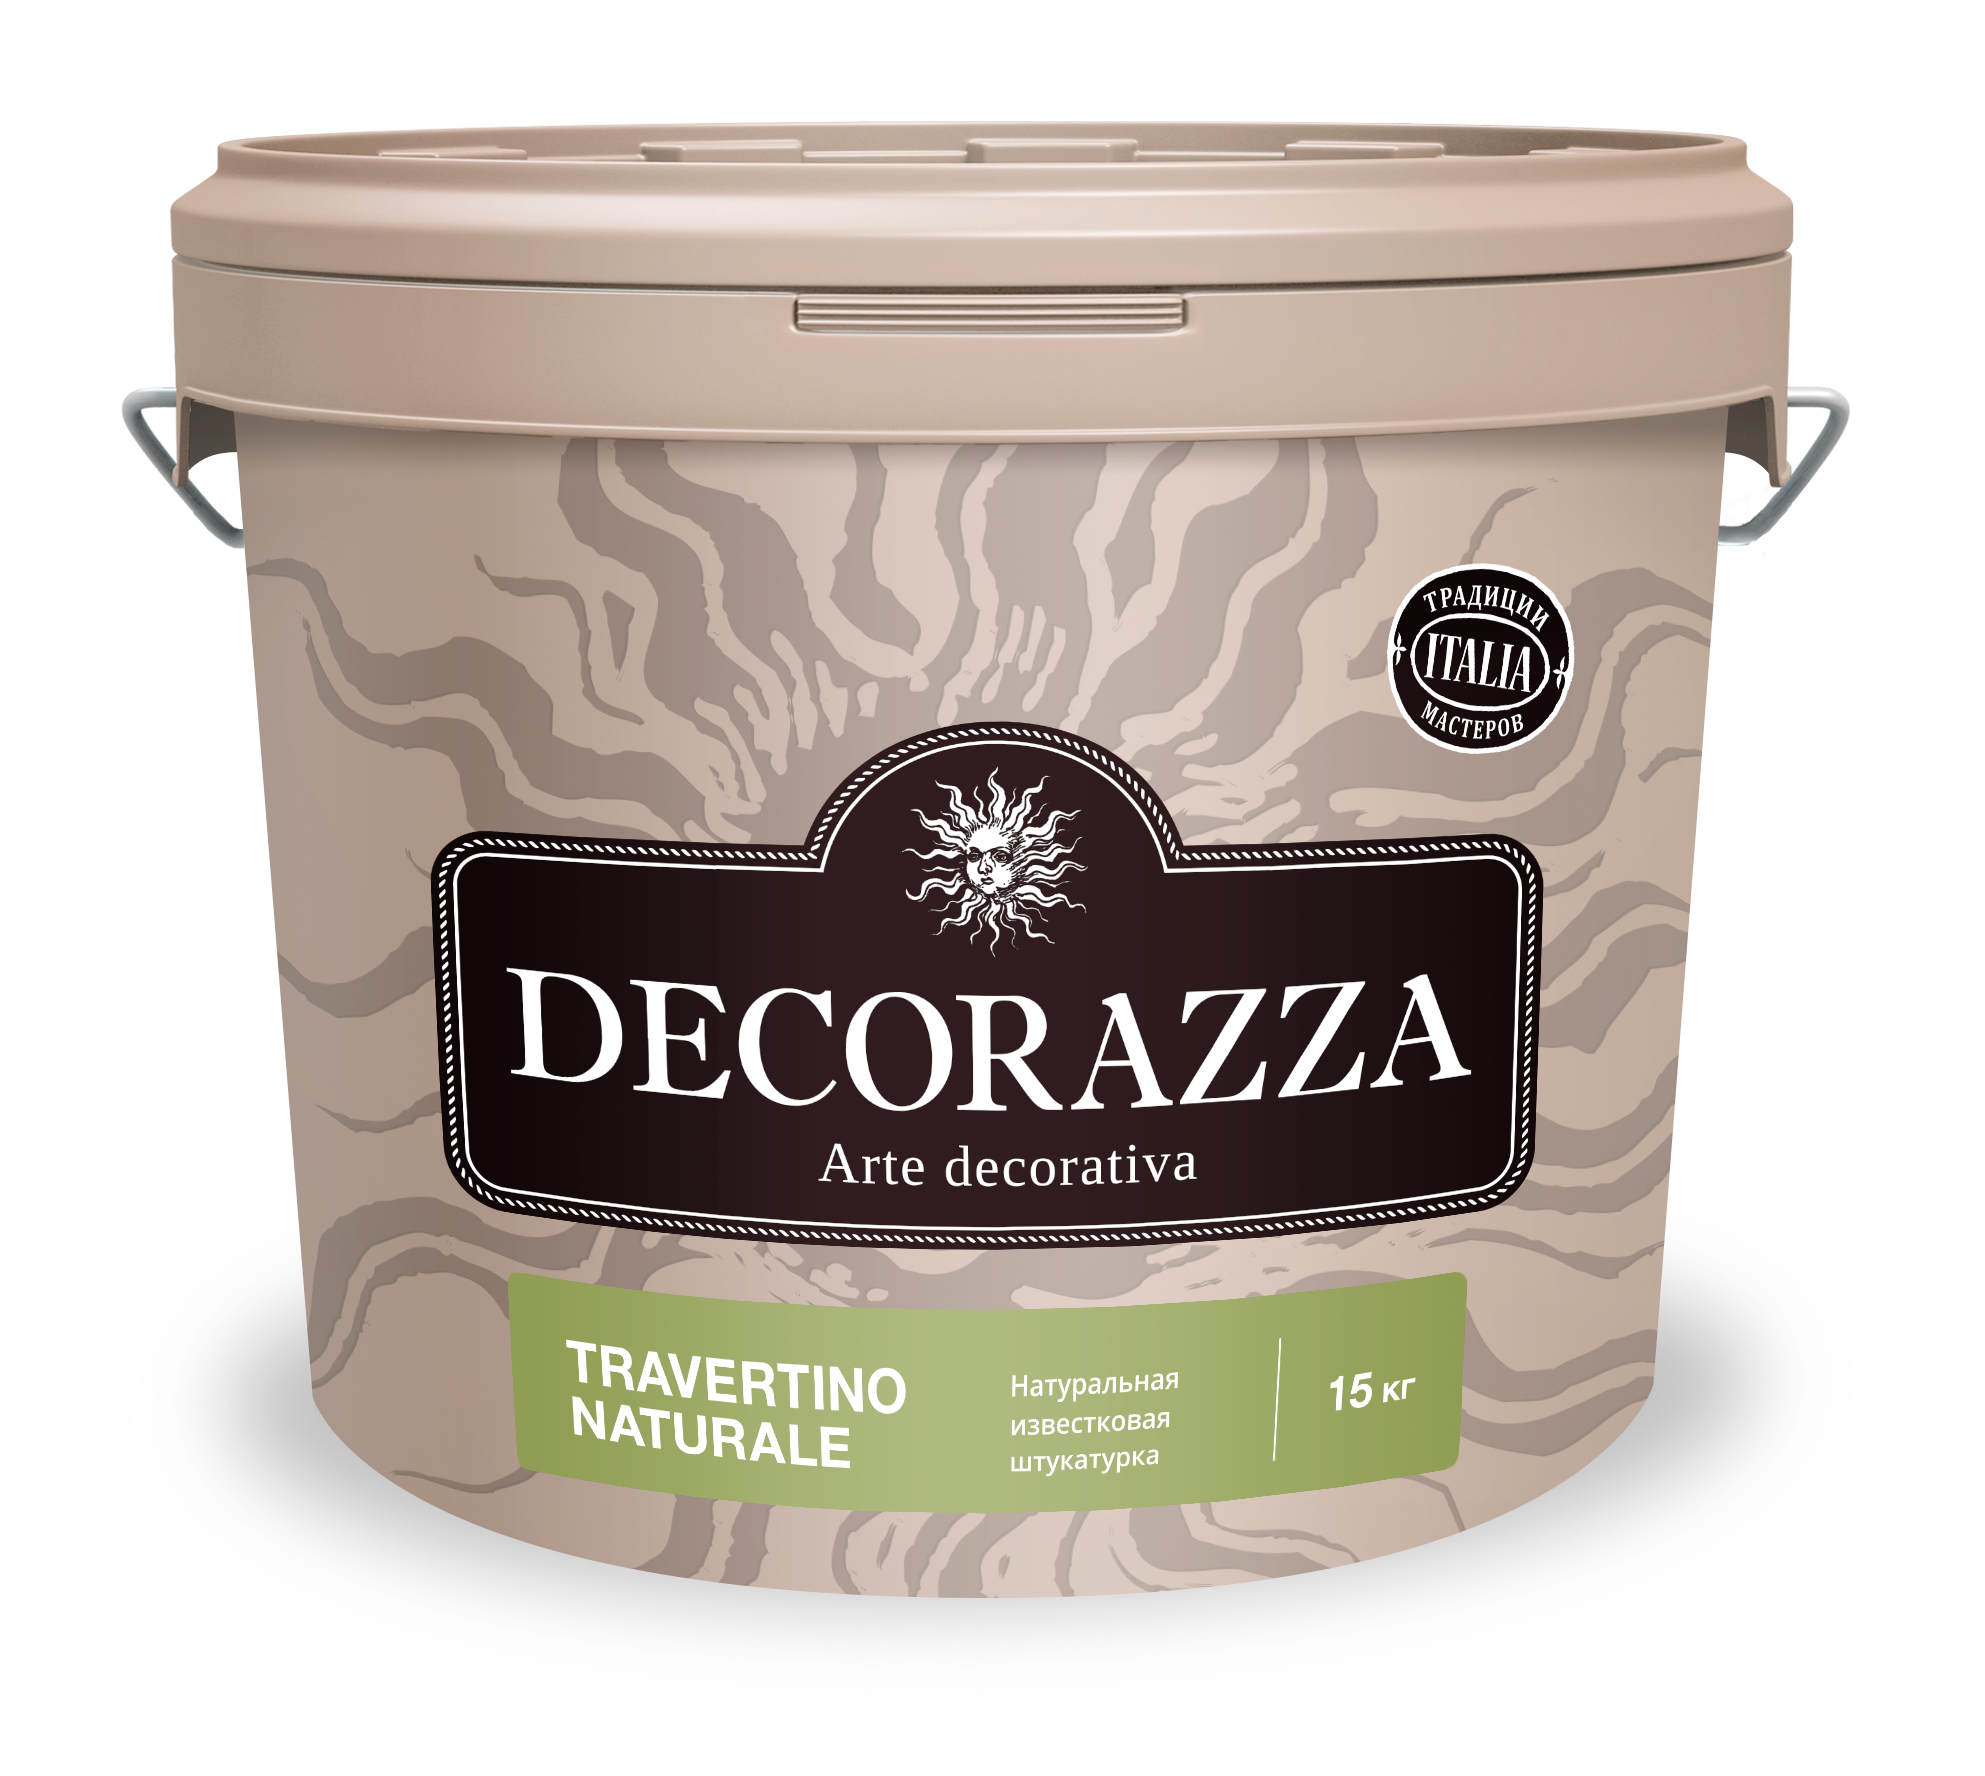 Декоративная штукатурка Decorazza Travertino naturale TRN 001, 15 кг